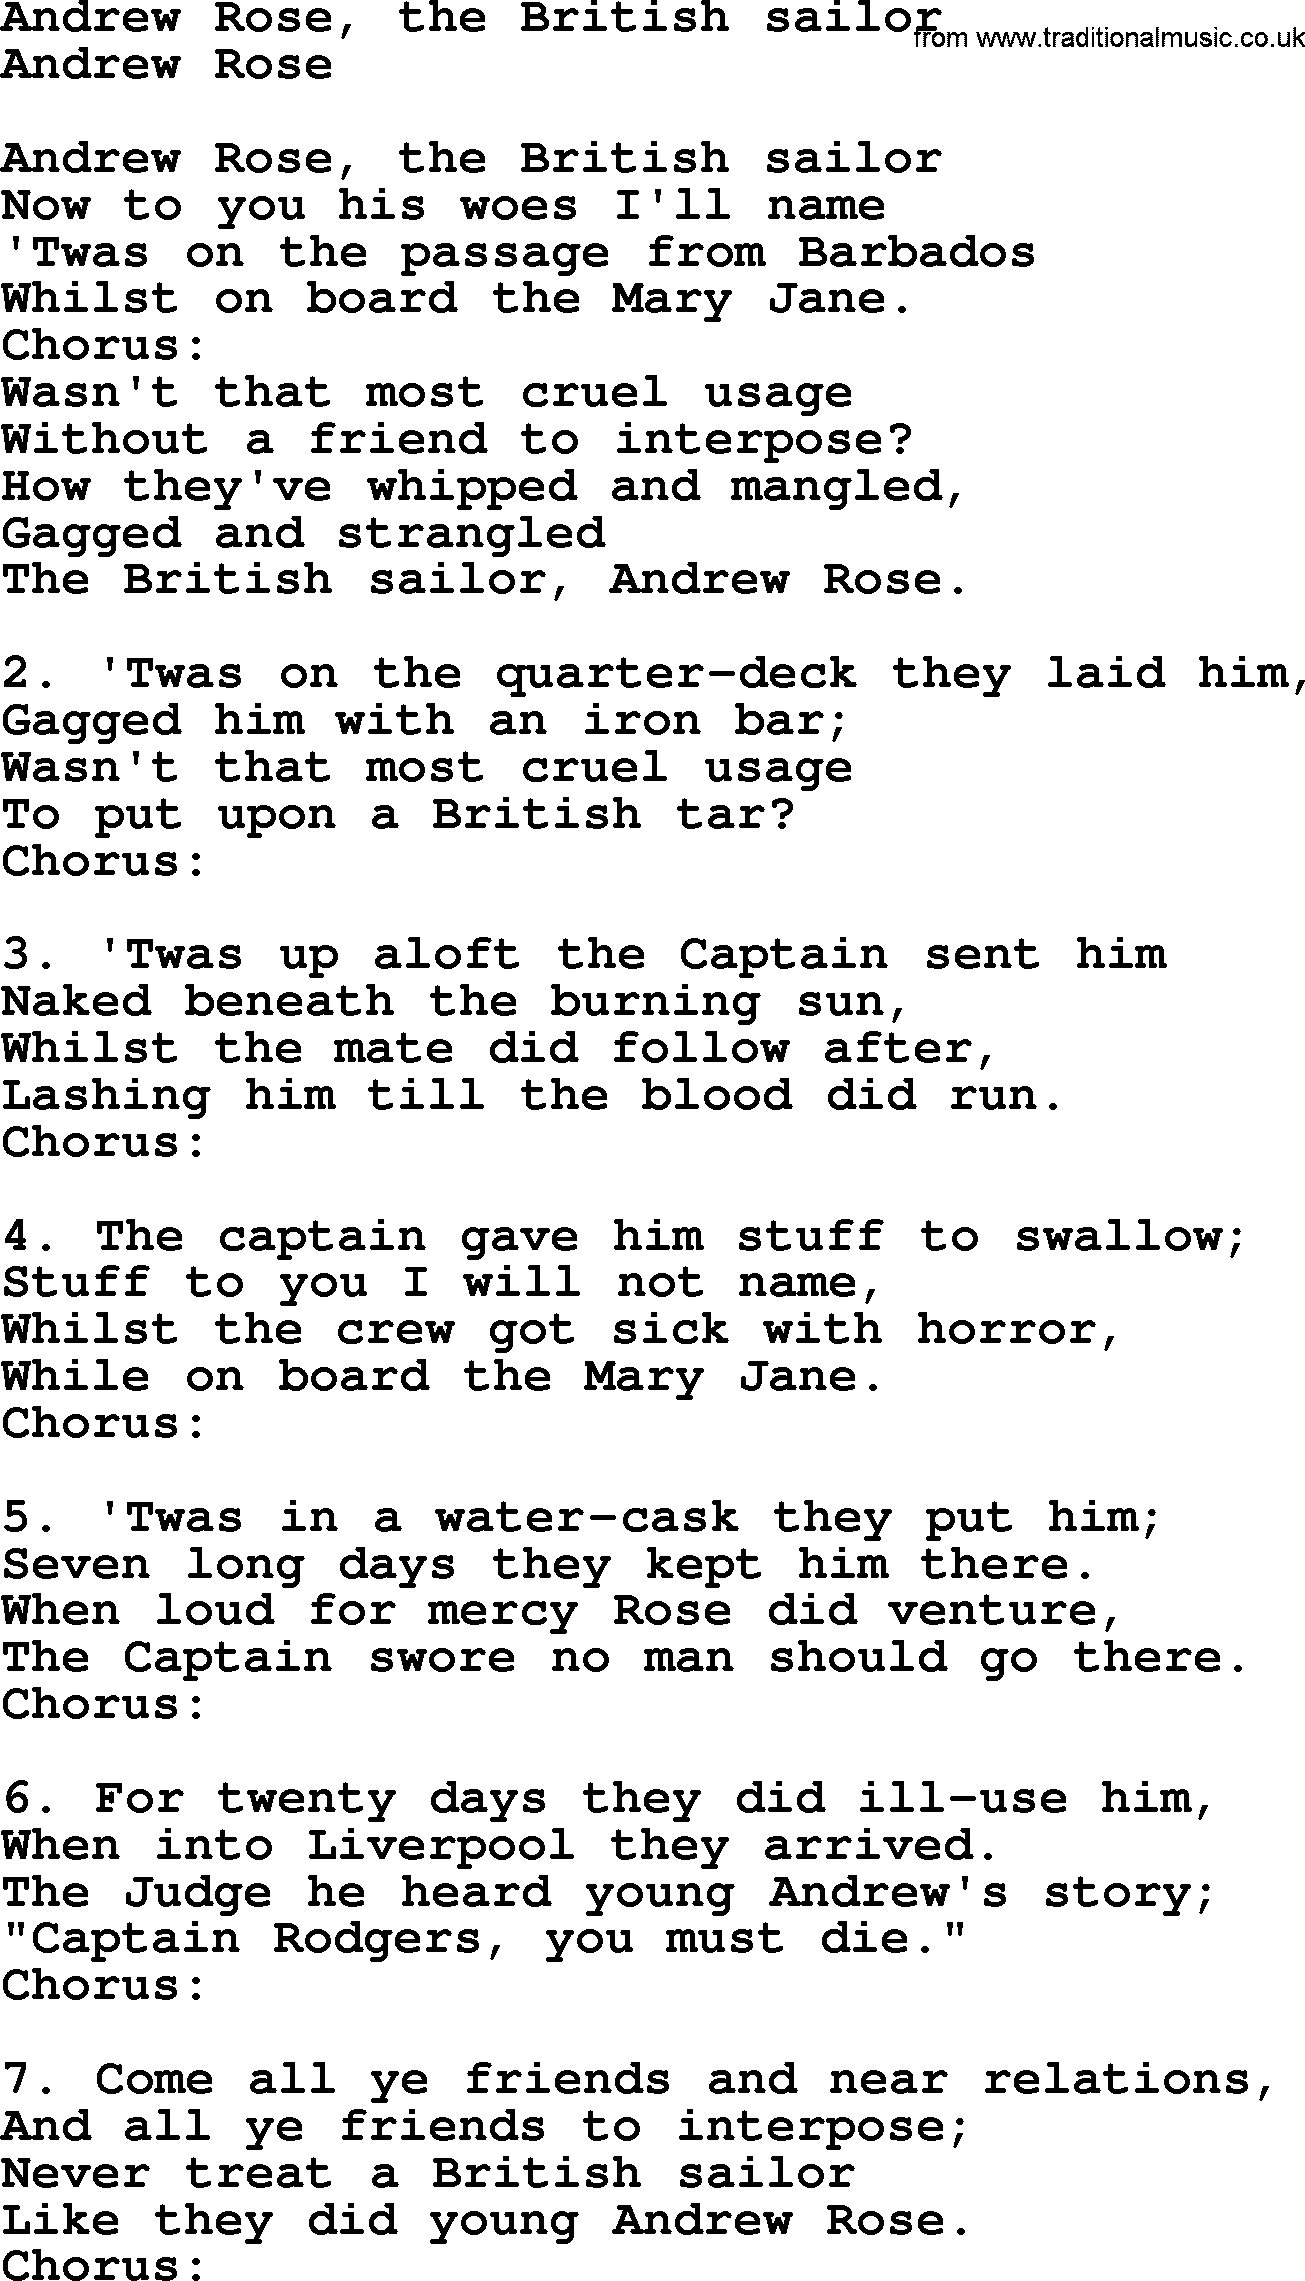 Sea Song or Shantie: Andrew Rose The British Sailor, lyrics